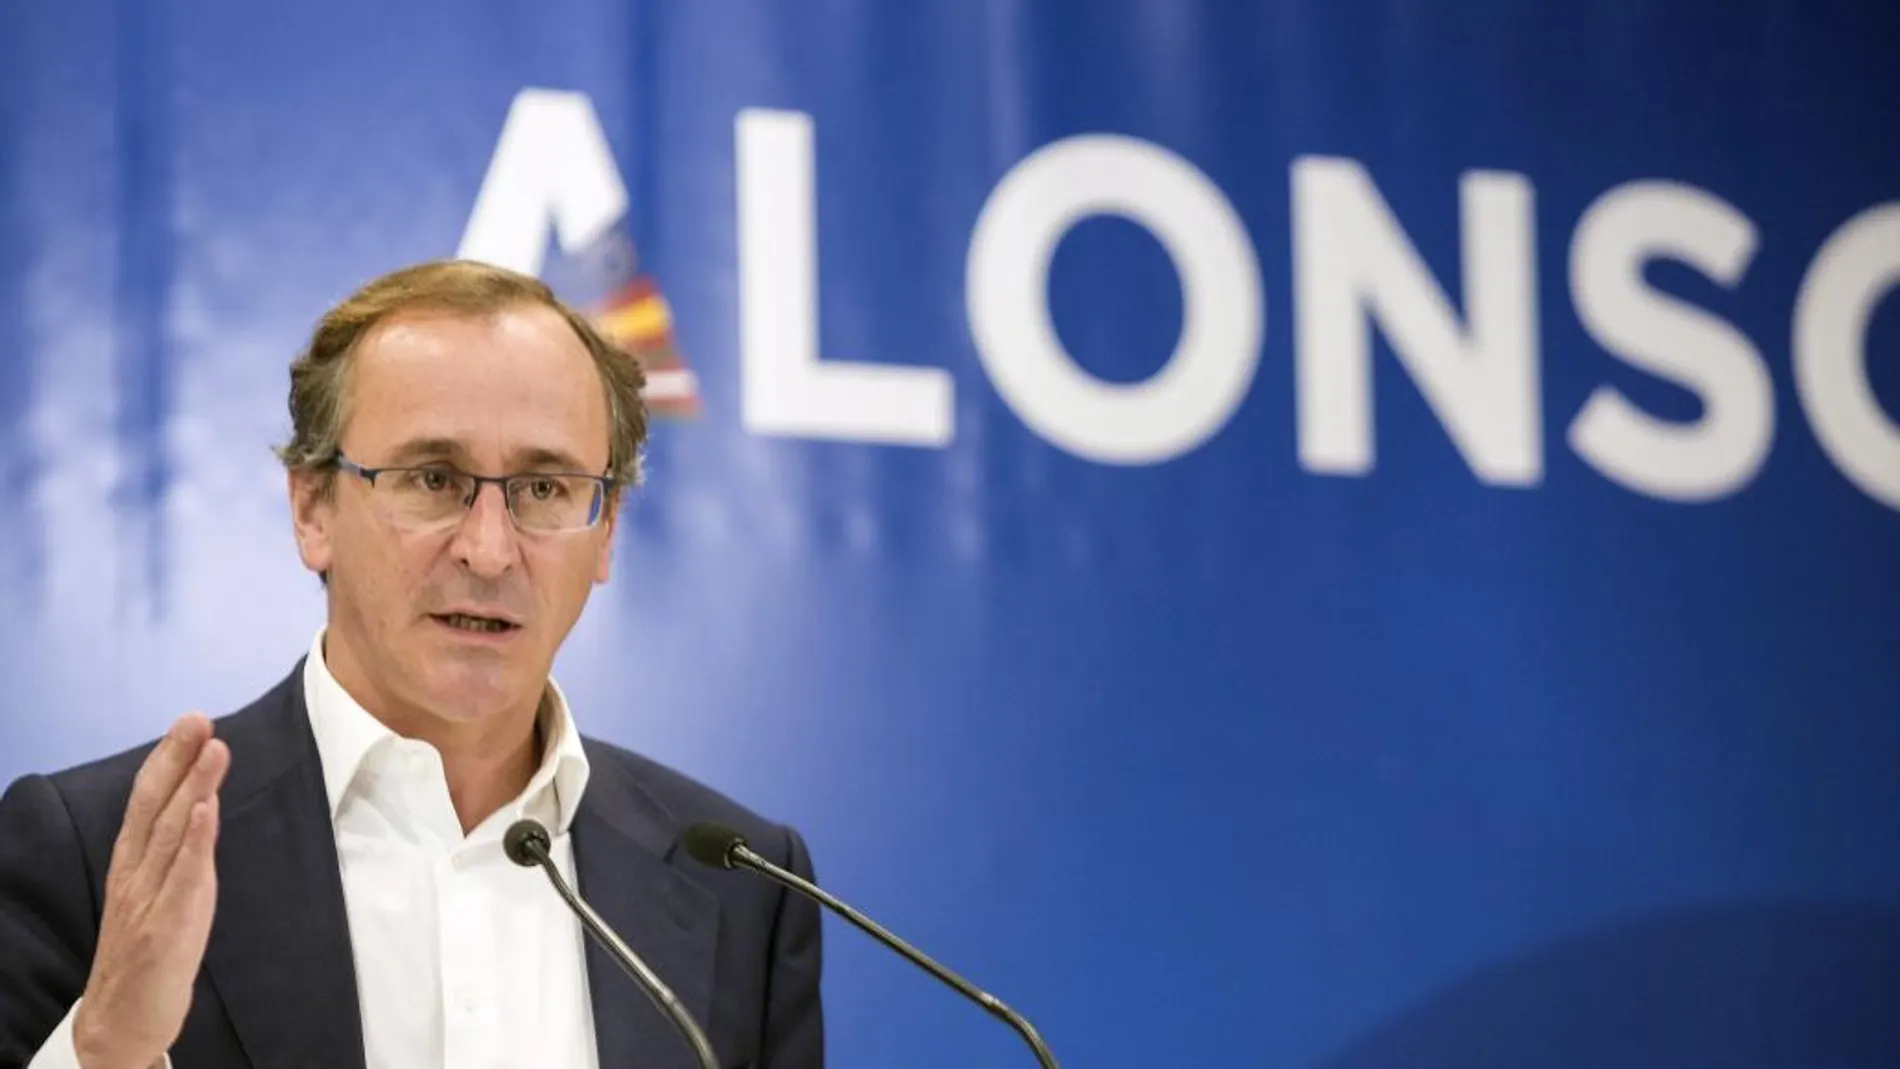 El candidato a lehendakari por el PP, Alfonso Alonso